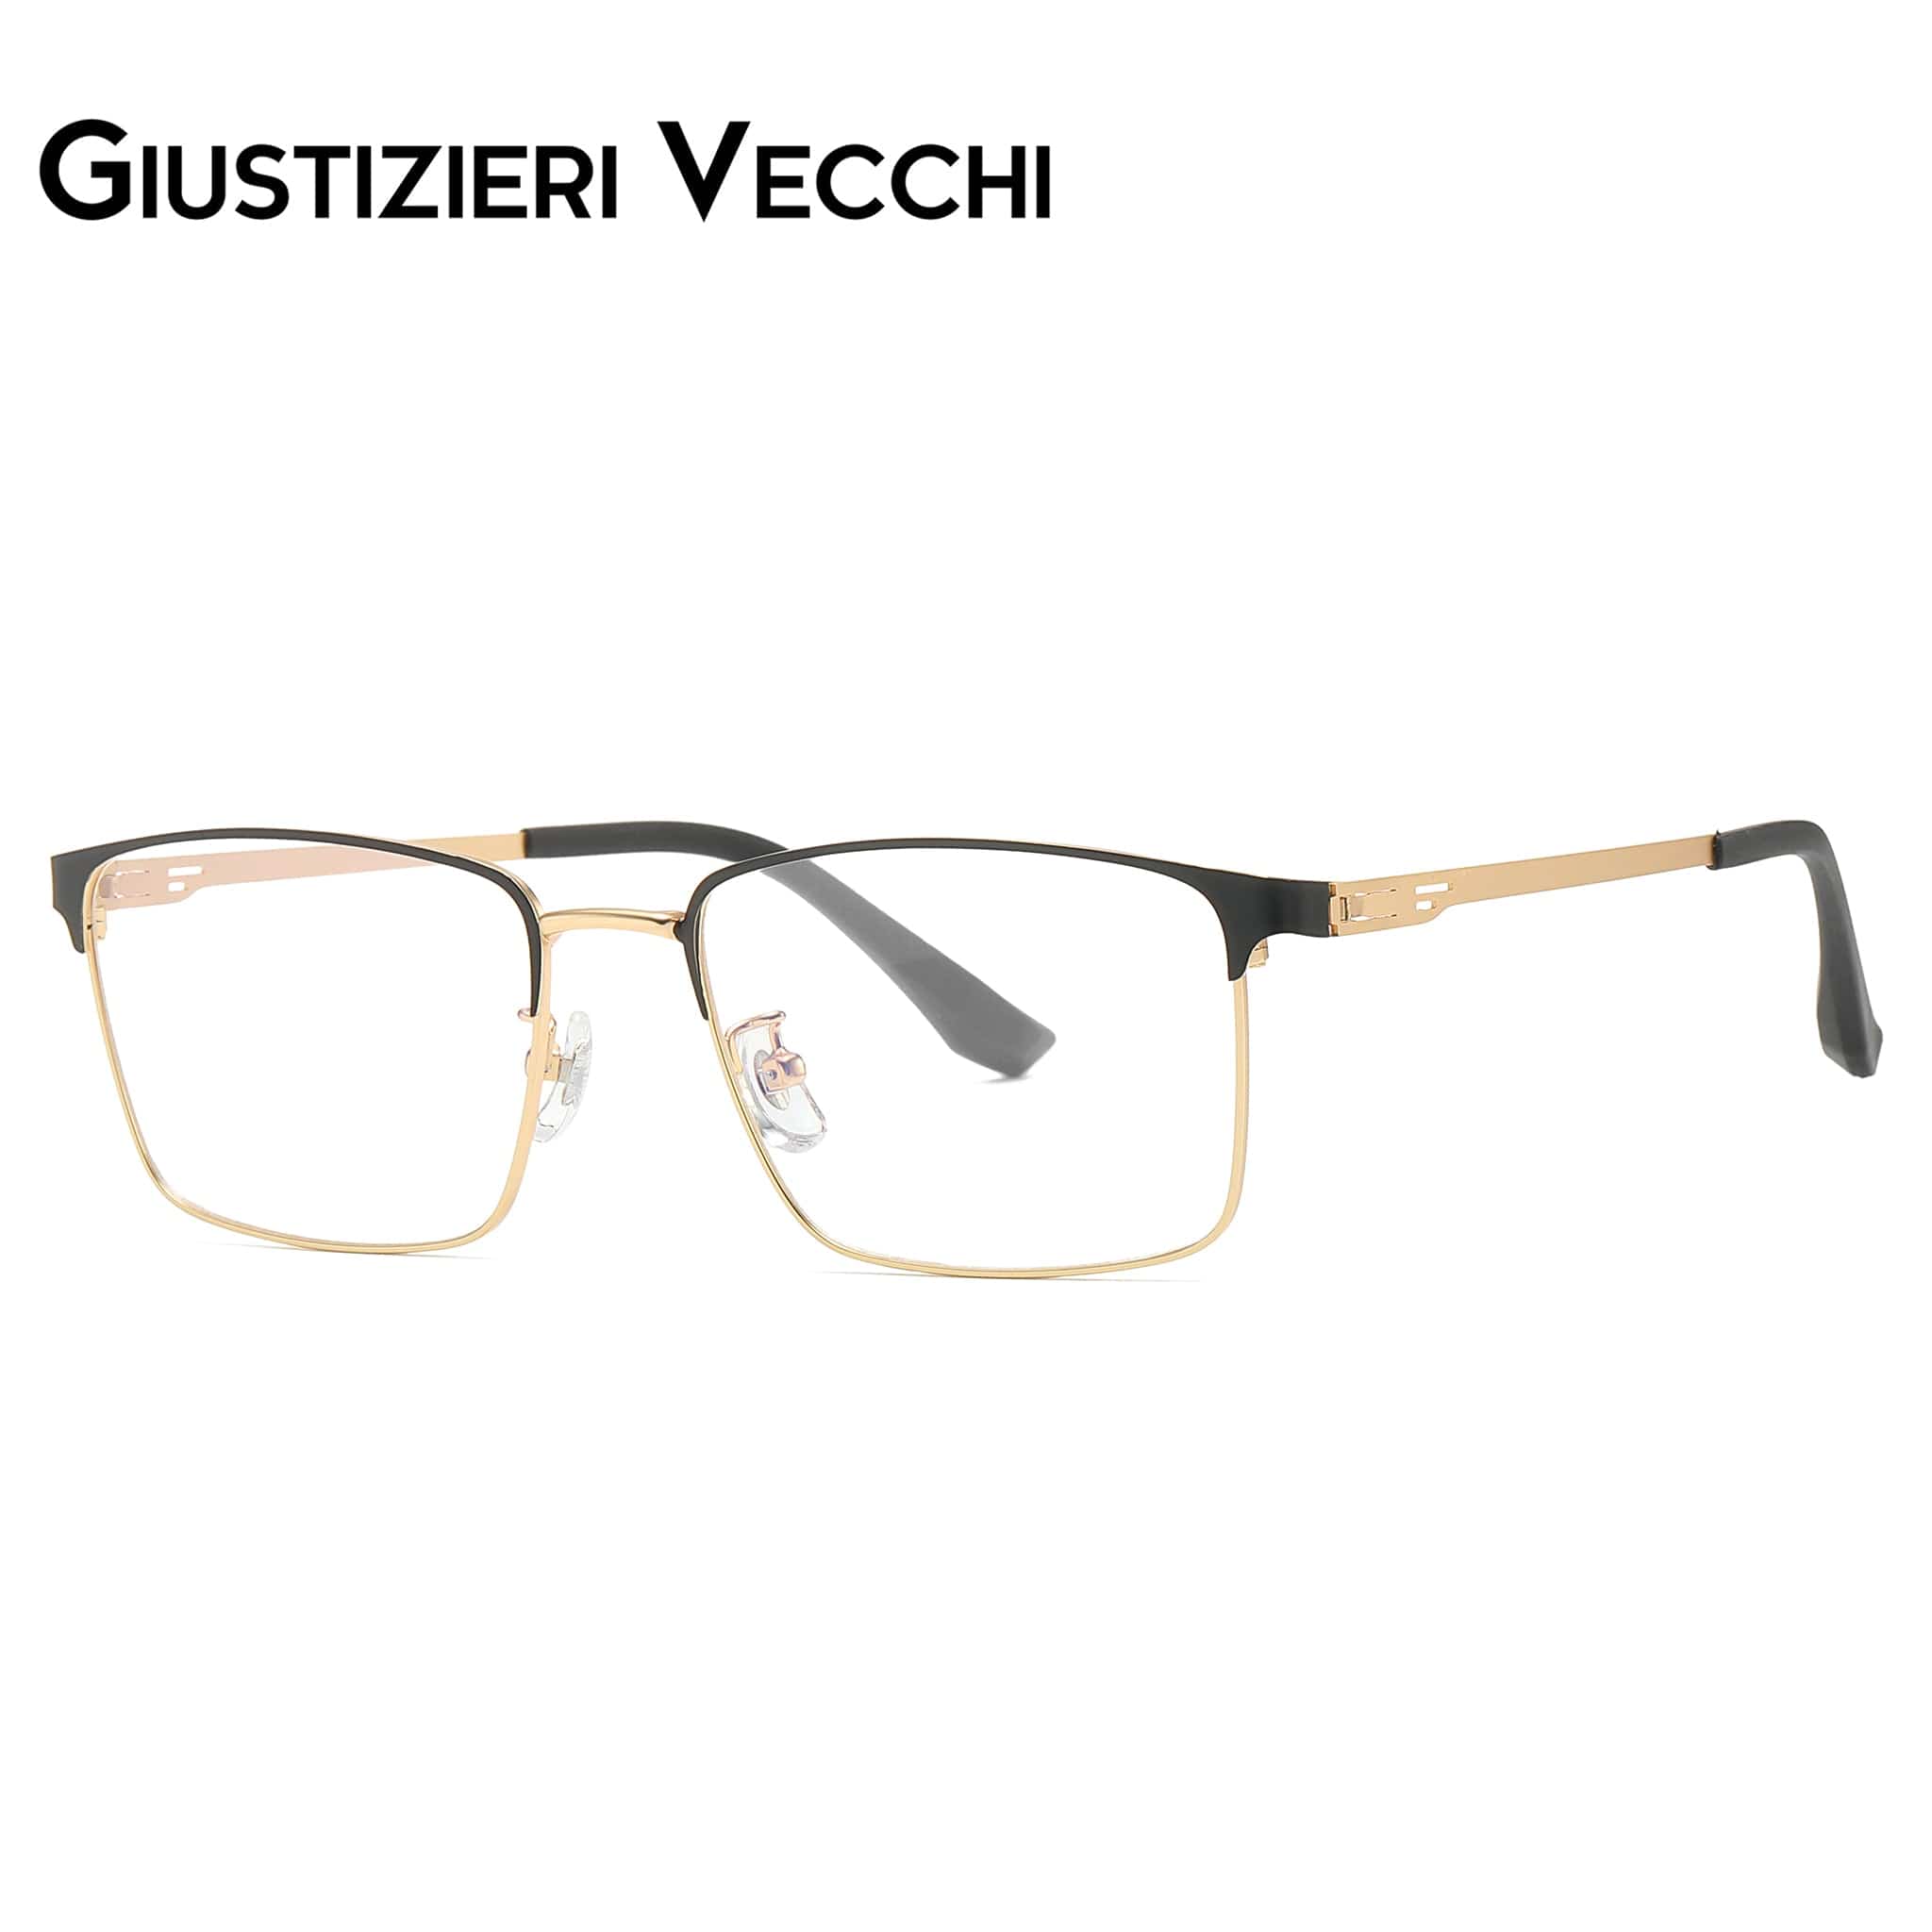 GIUSTIZIERI VECCHI Eyeglasses SkyRider Duo